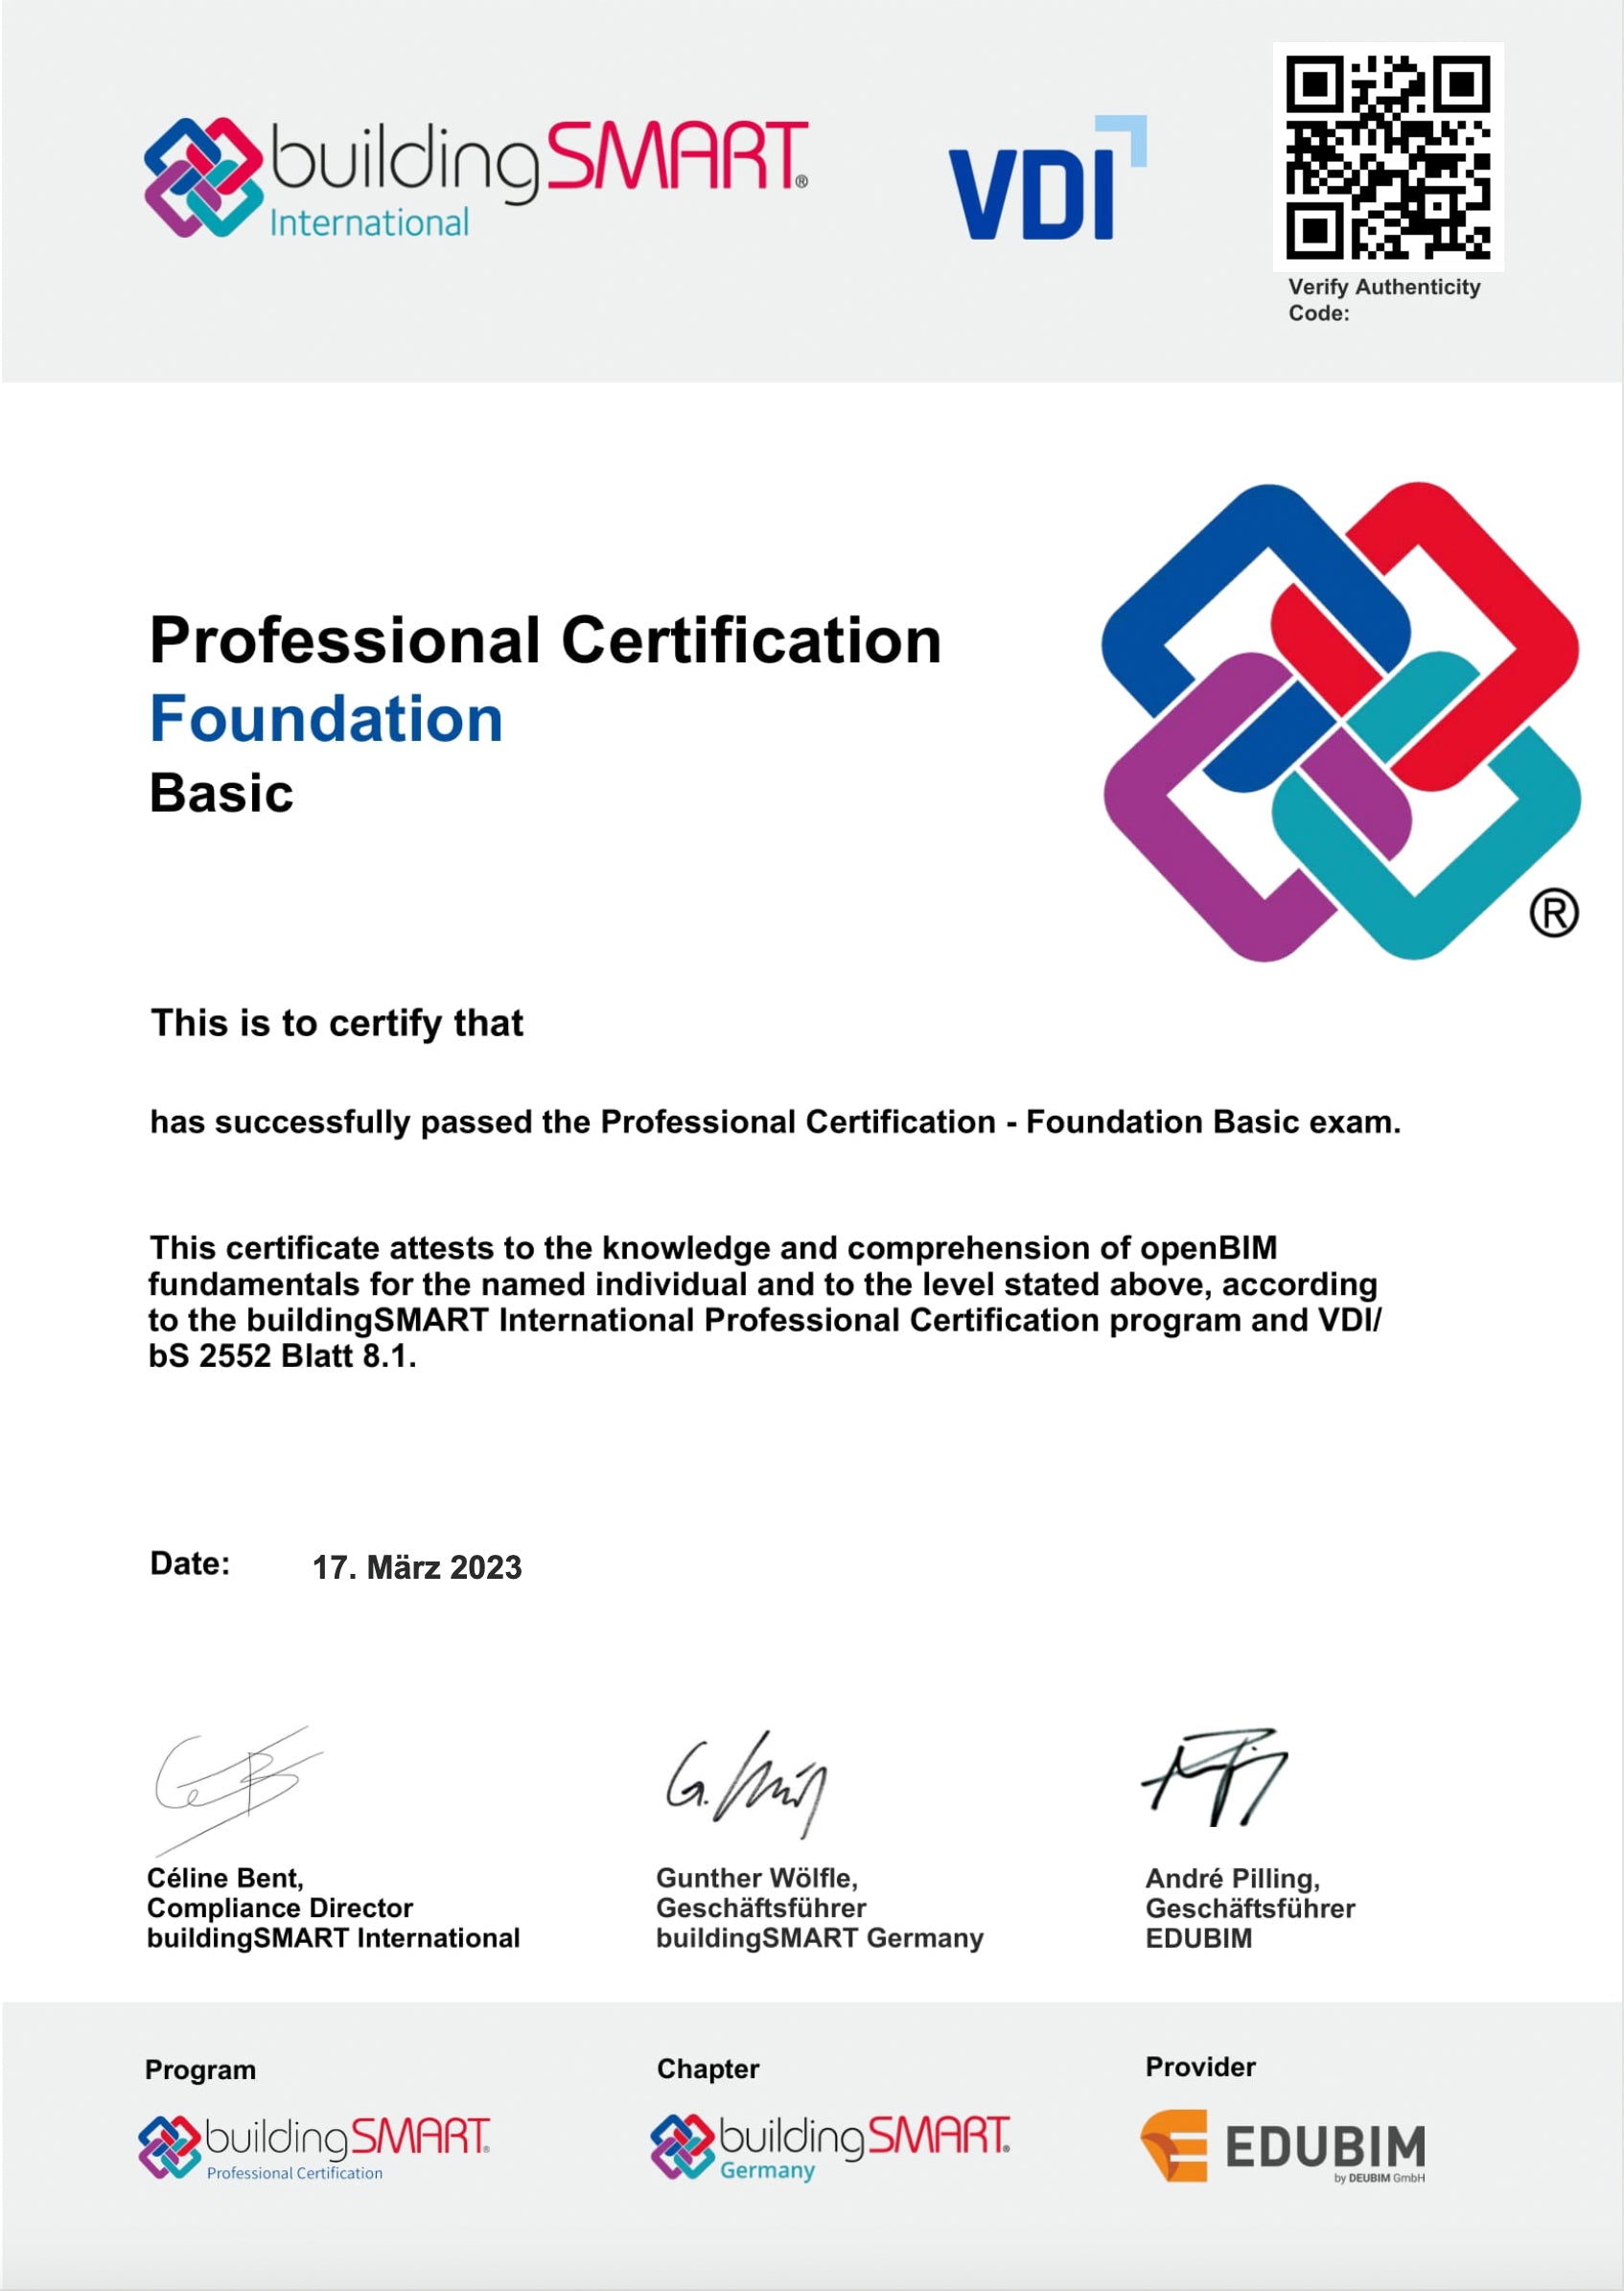 ☆ BIM Professional Certification Foundation & Zertifikat